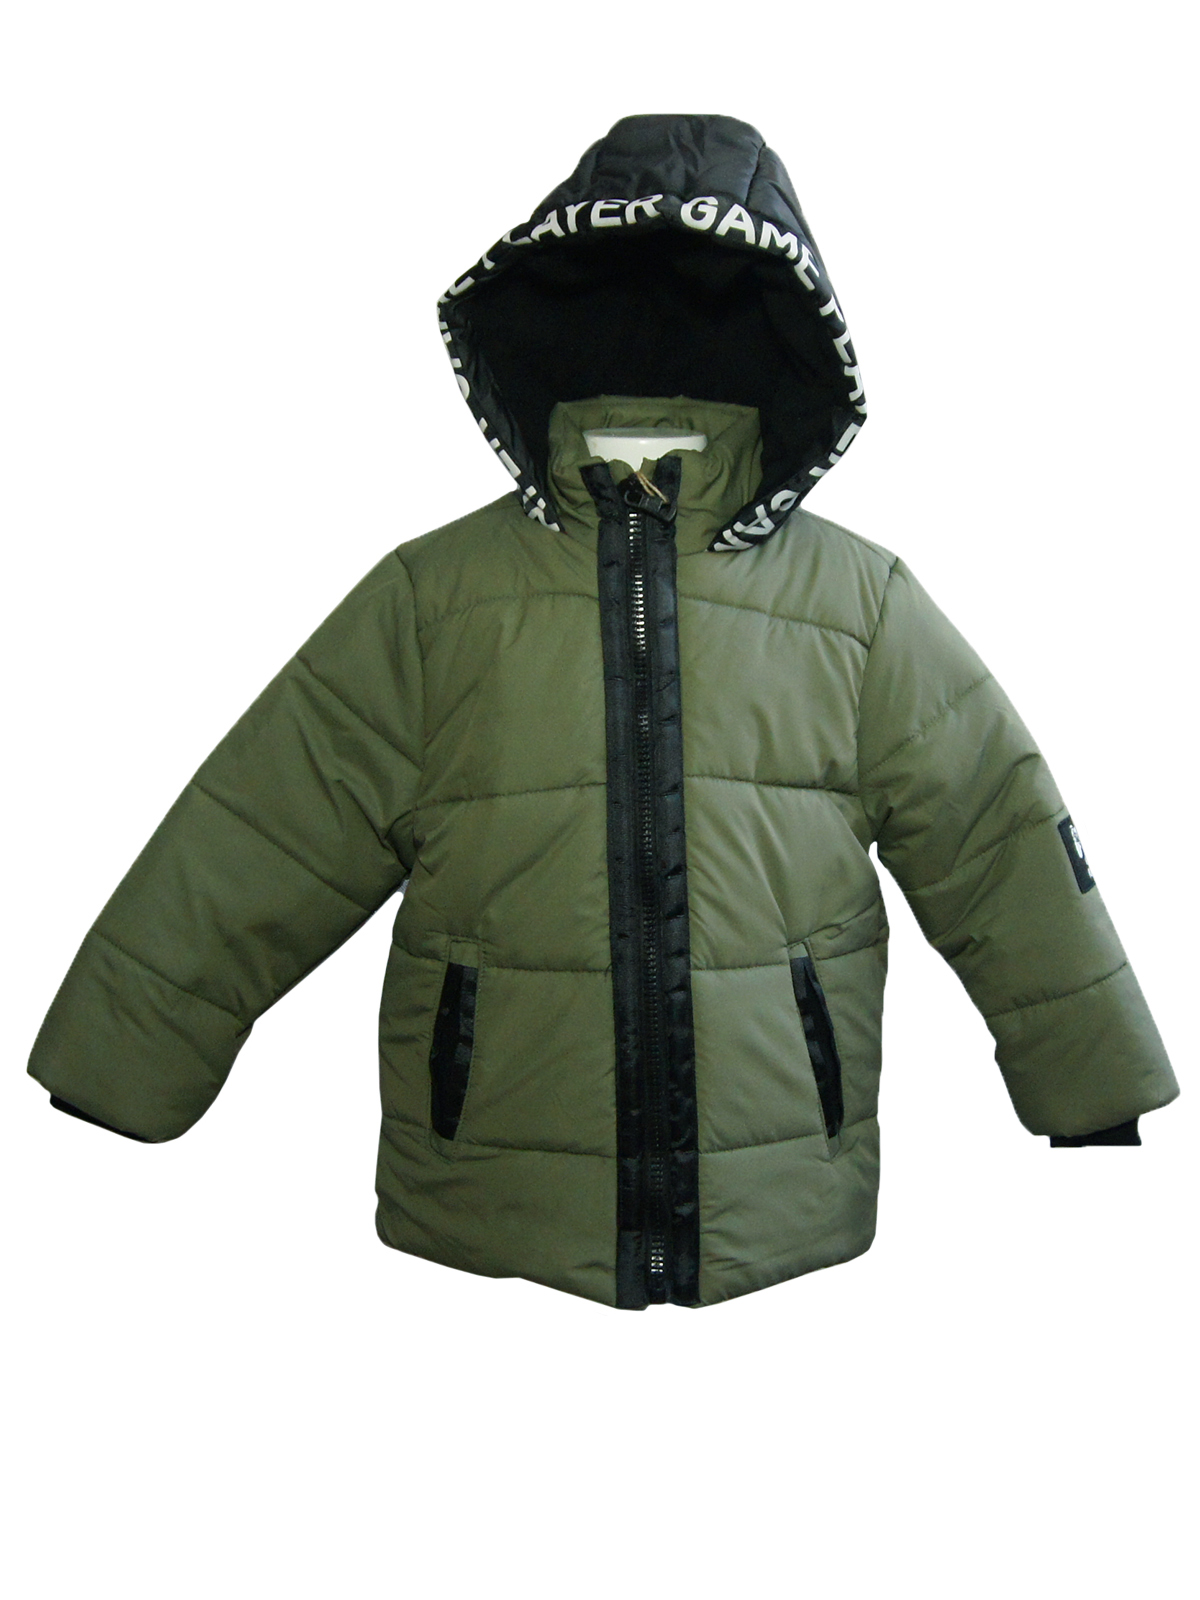 Куртка детская MDM MIDIMOD GOLD 20862, хаки, 116 комплект куртка и полукомбинезон хаки moncler детский